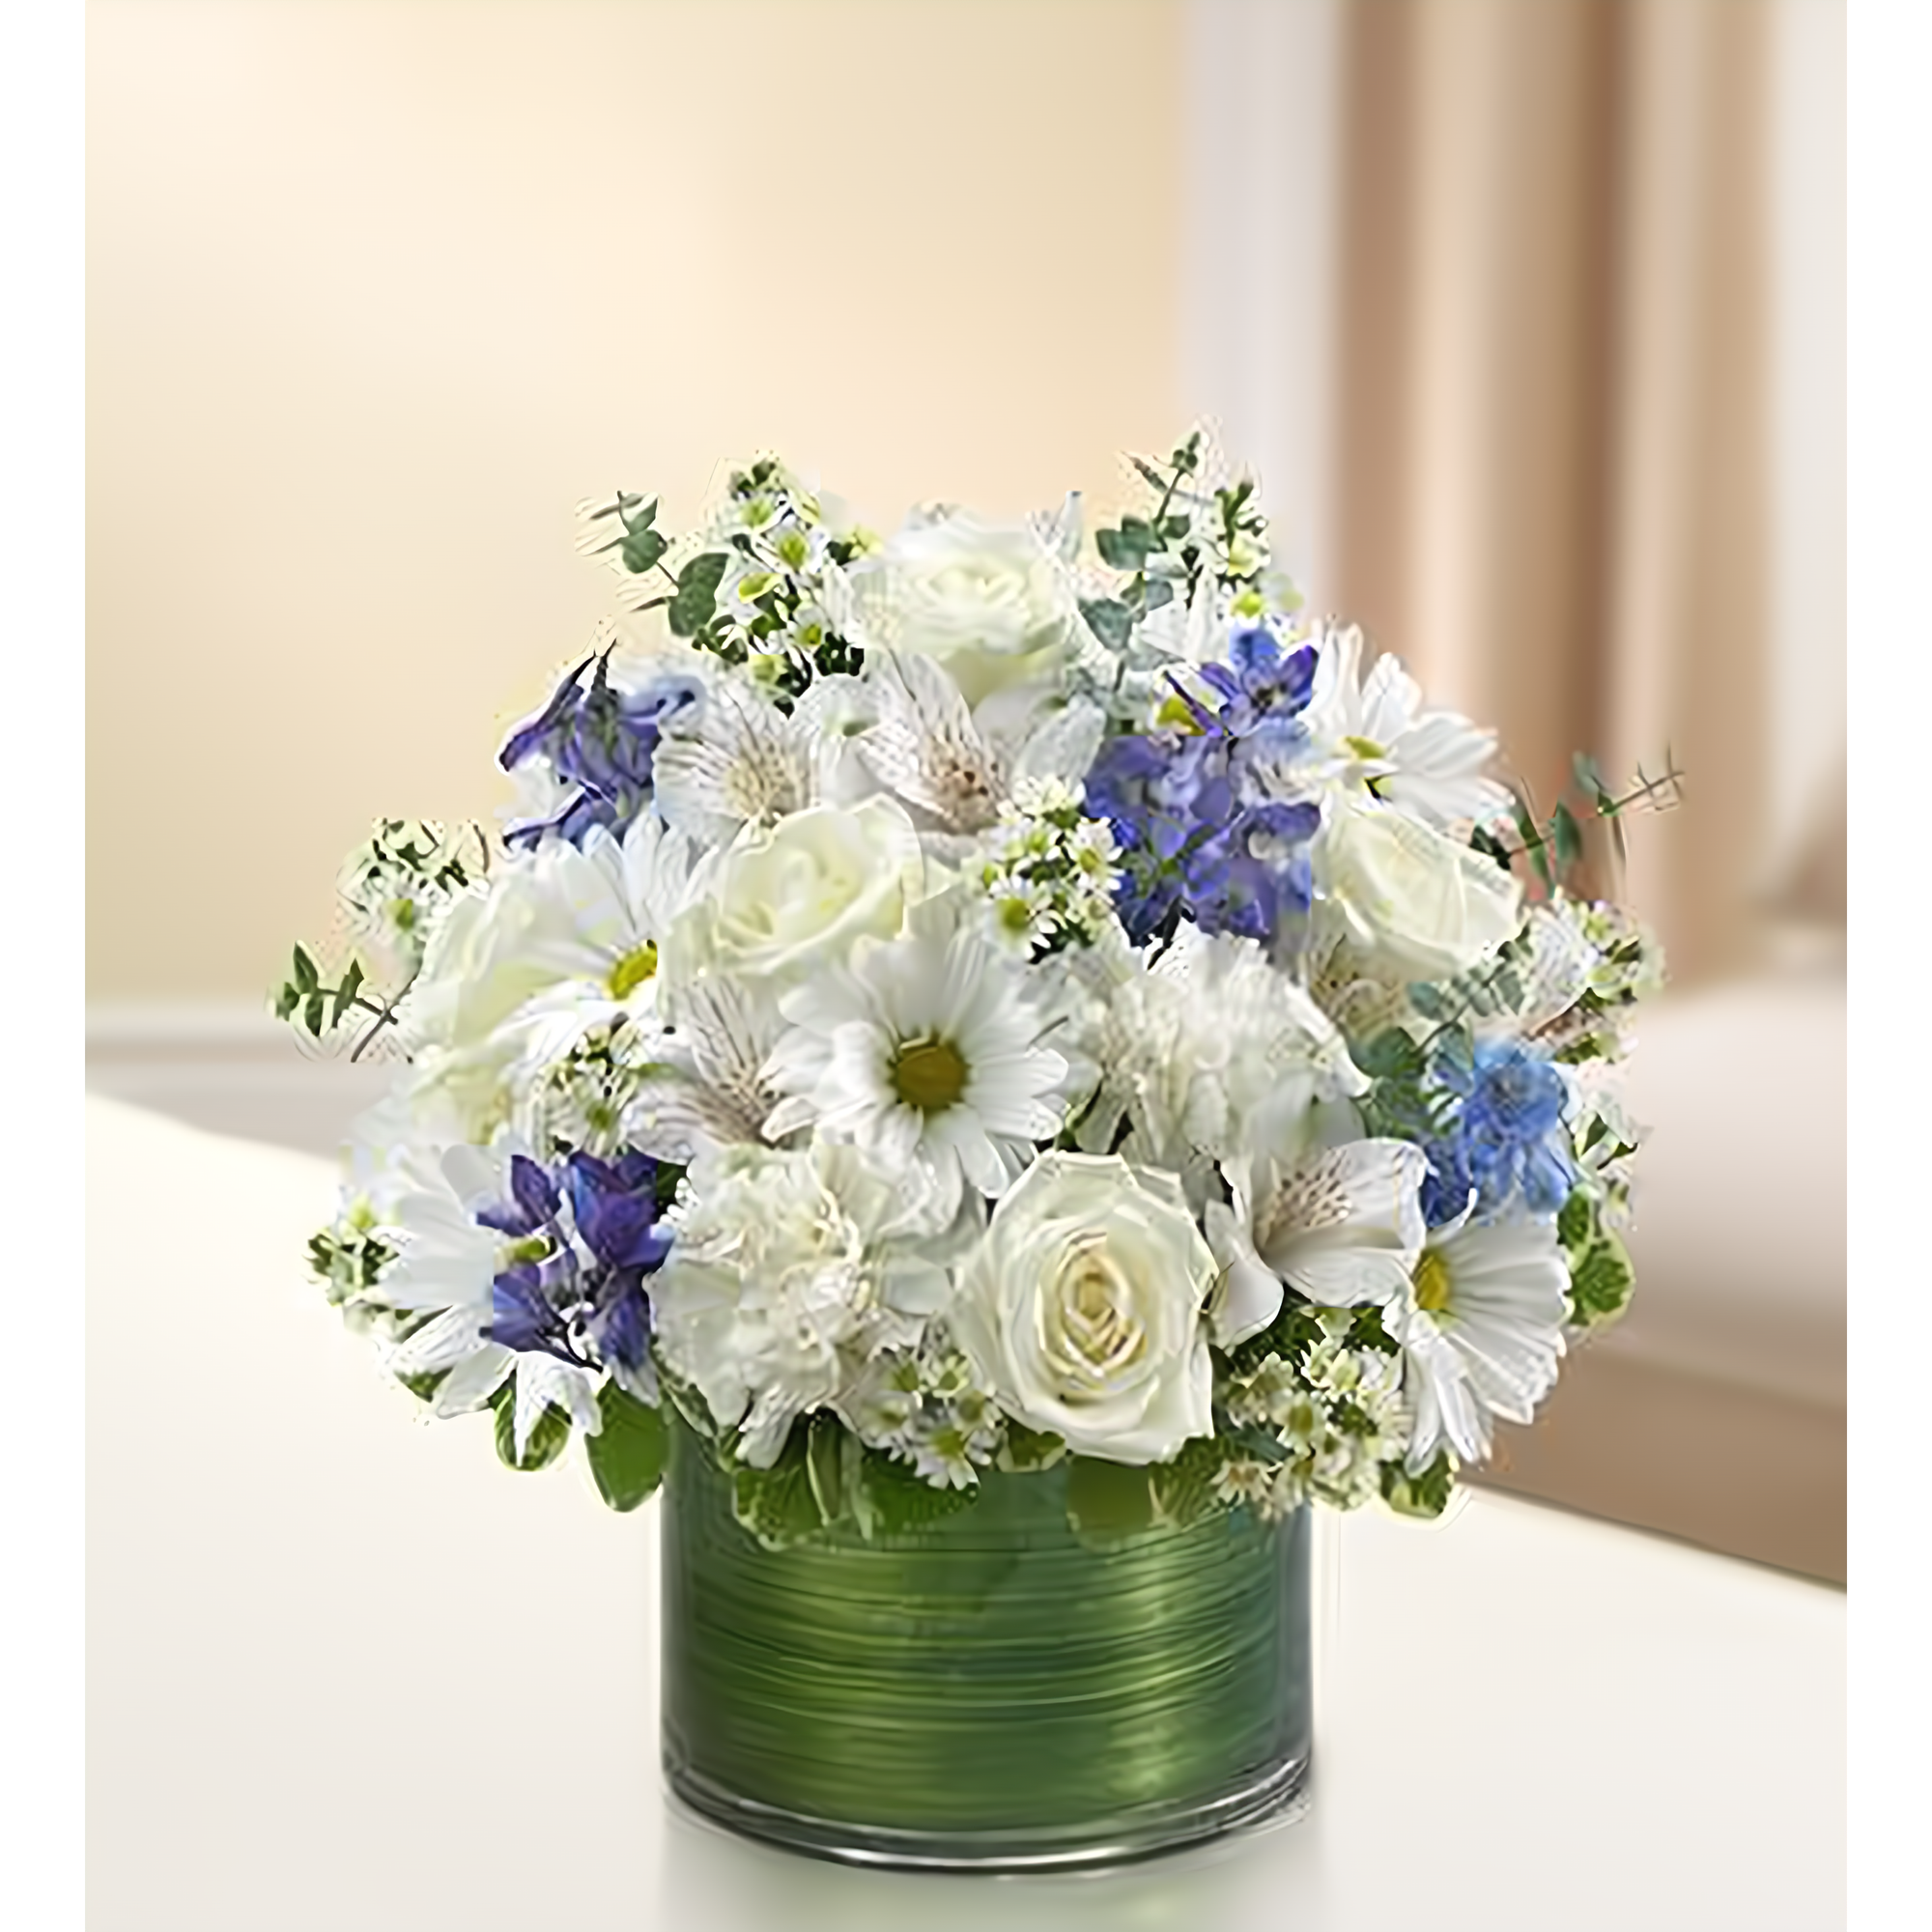 Manhattan Flower Delivery - Cherished Memories - Blue and White - Seasonal > Hanukkah